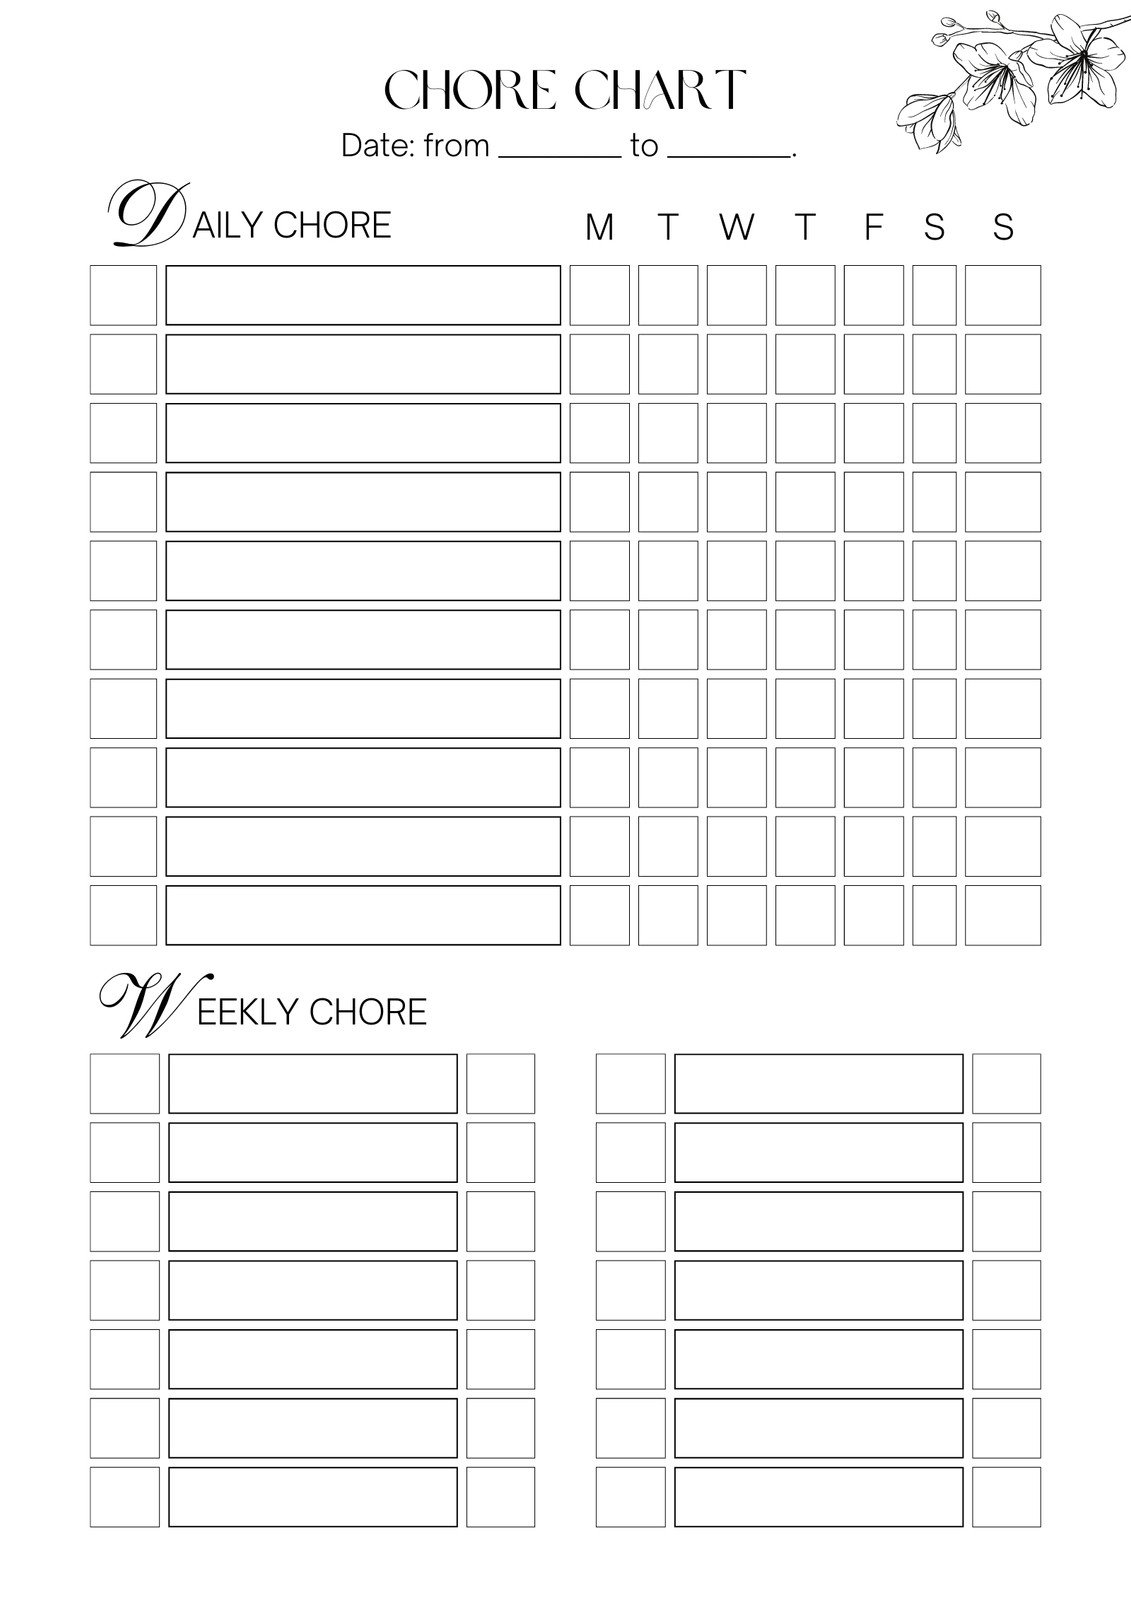 Free Customizable Chore Chart Templates To Print Canva - Free Printable Chore Chart Templates